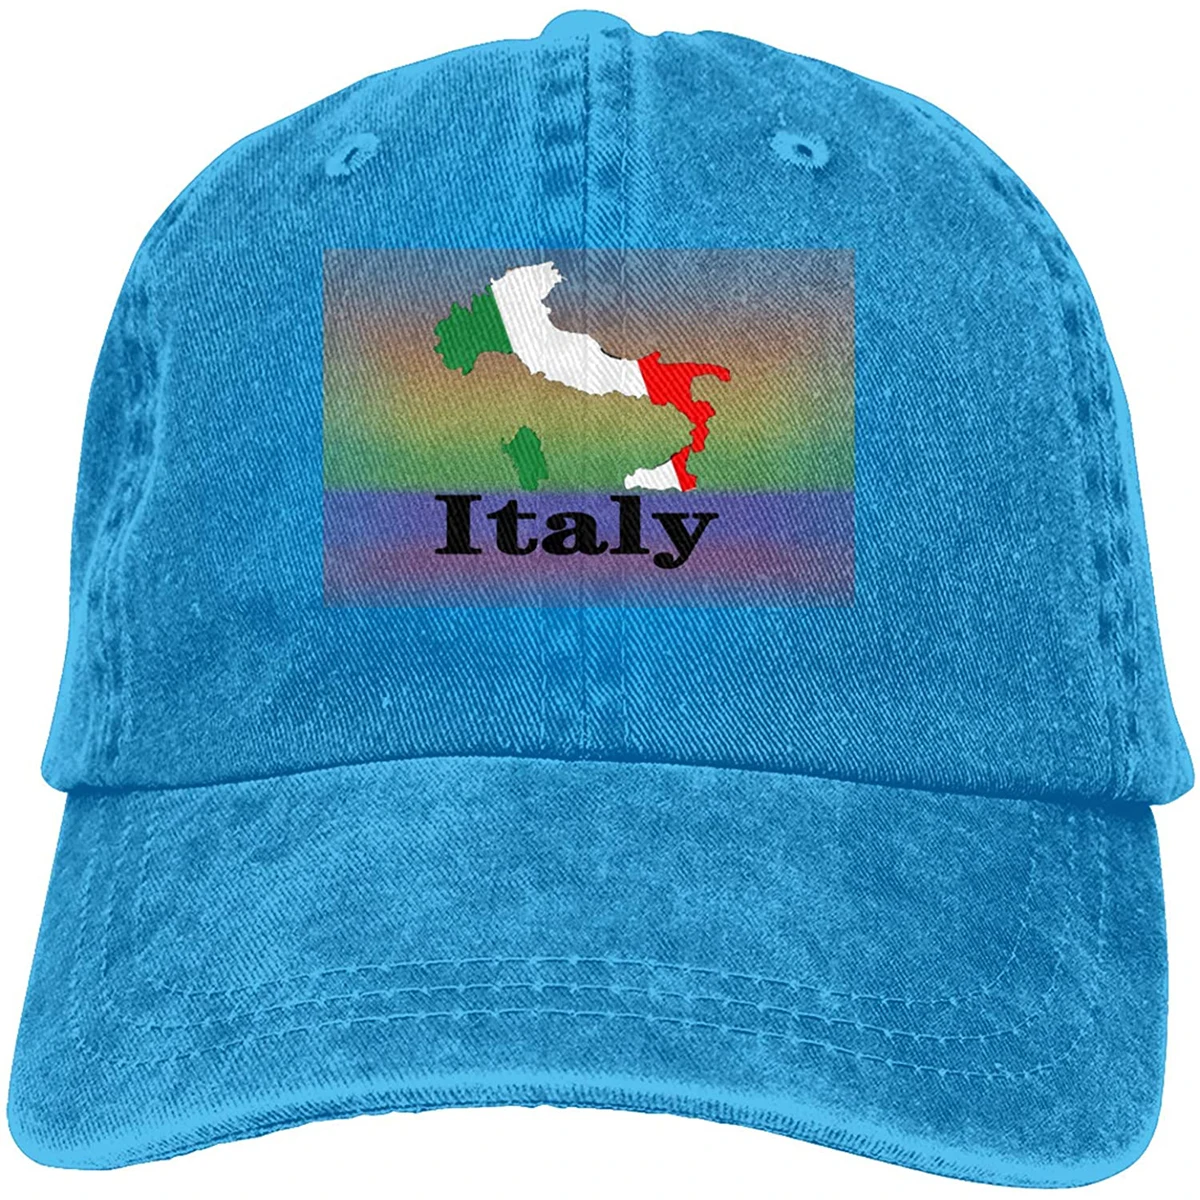 

Italy Under The Stars Sports Denim Cap Adjustable Unisex Plain Baseball Cowboy Snapback Hat Sombreros De Mujer Y De Hombre.